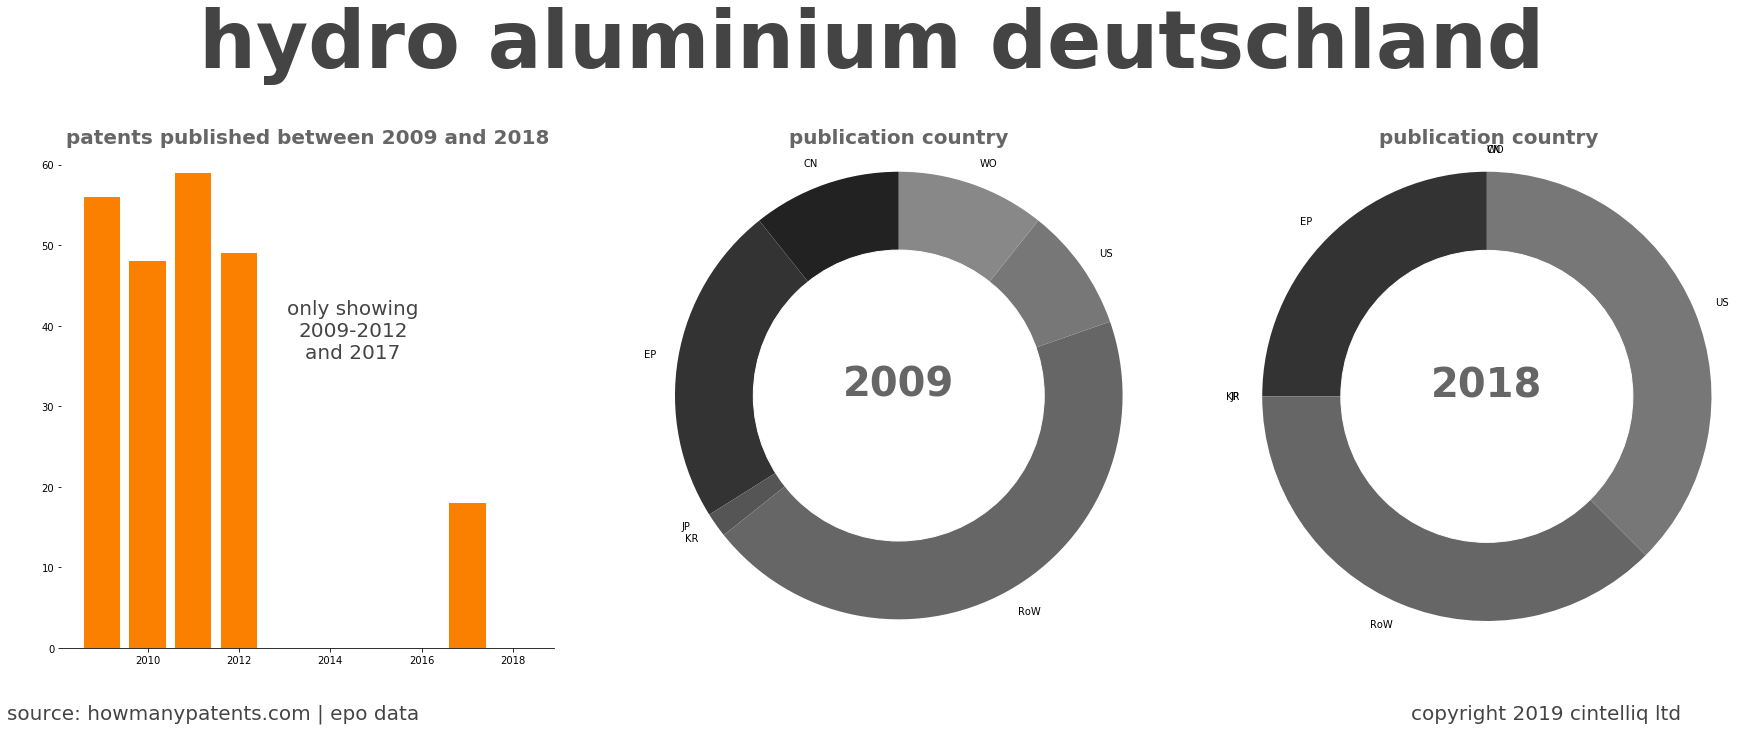 summary of patents for Hydro Aluminium Deutschland